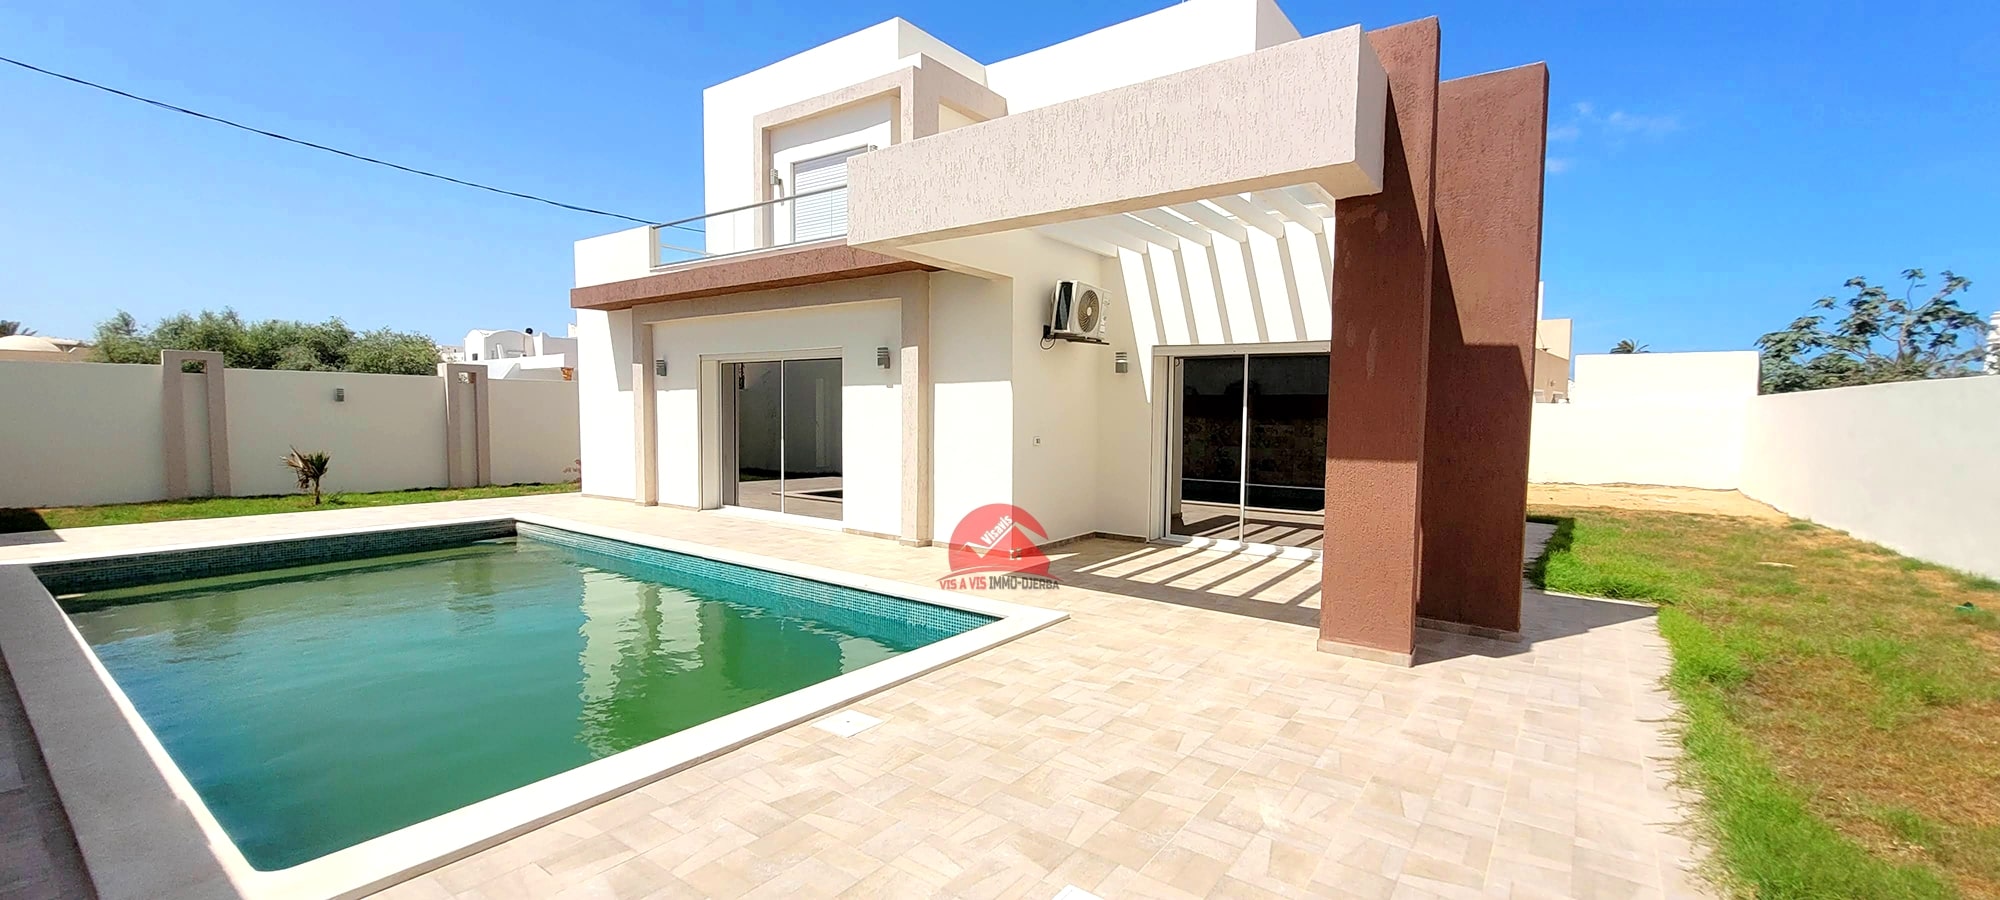 Djerba - Midoun Midoun Vente Maisons Villa avec piscine privee a midoun djerba ref v655